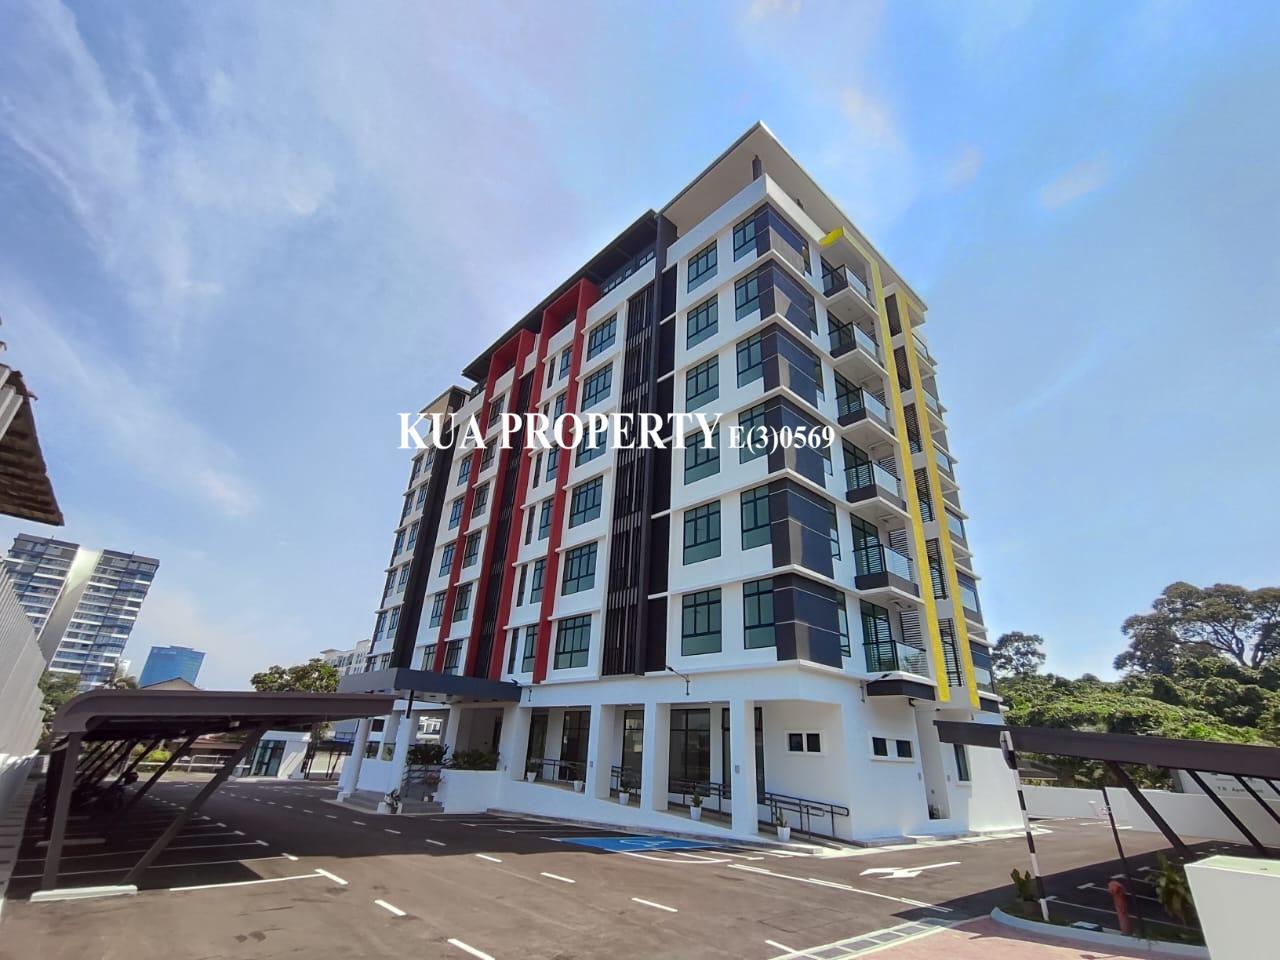 Tabuan Residence Apartment For Sale! Located at Jalan Tabuan, Kuching.